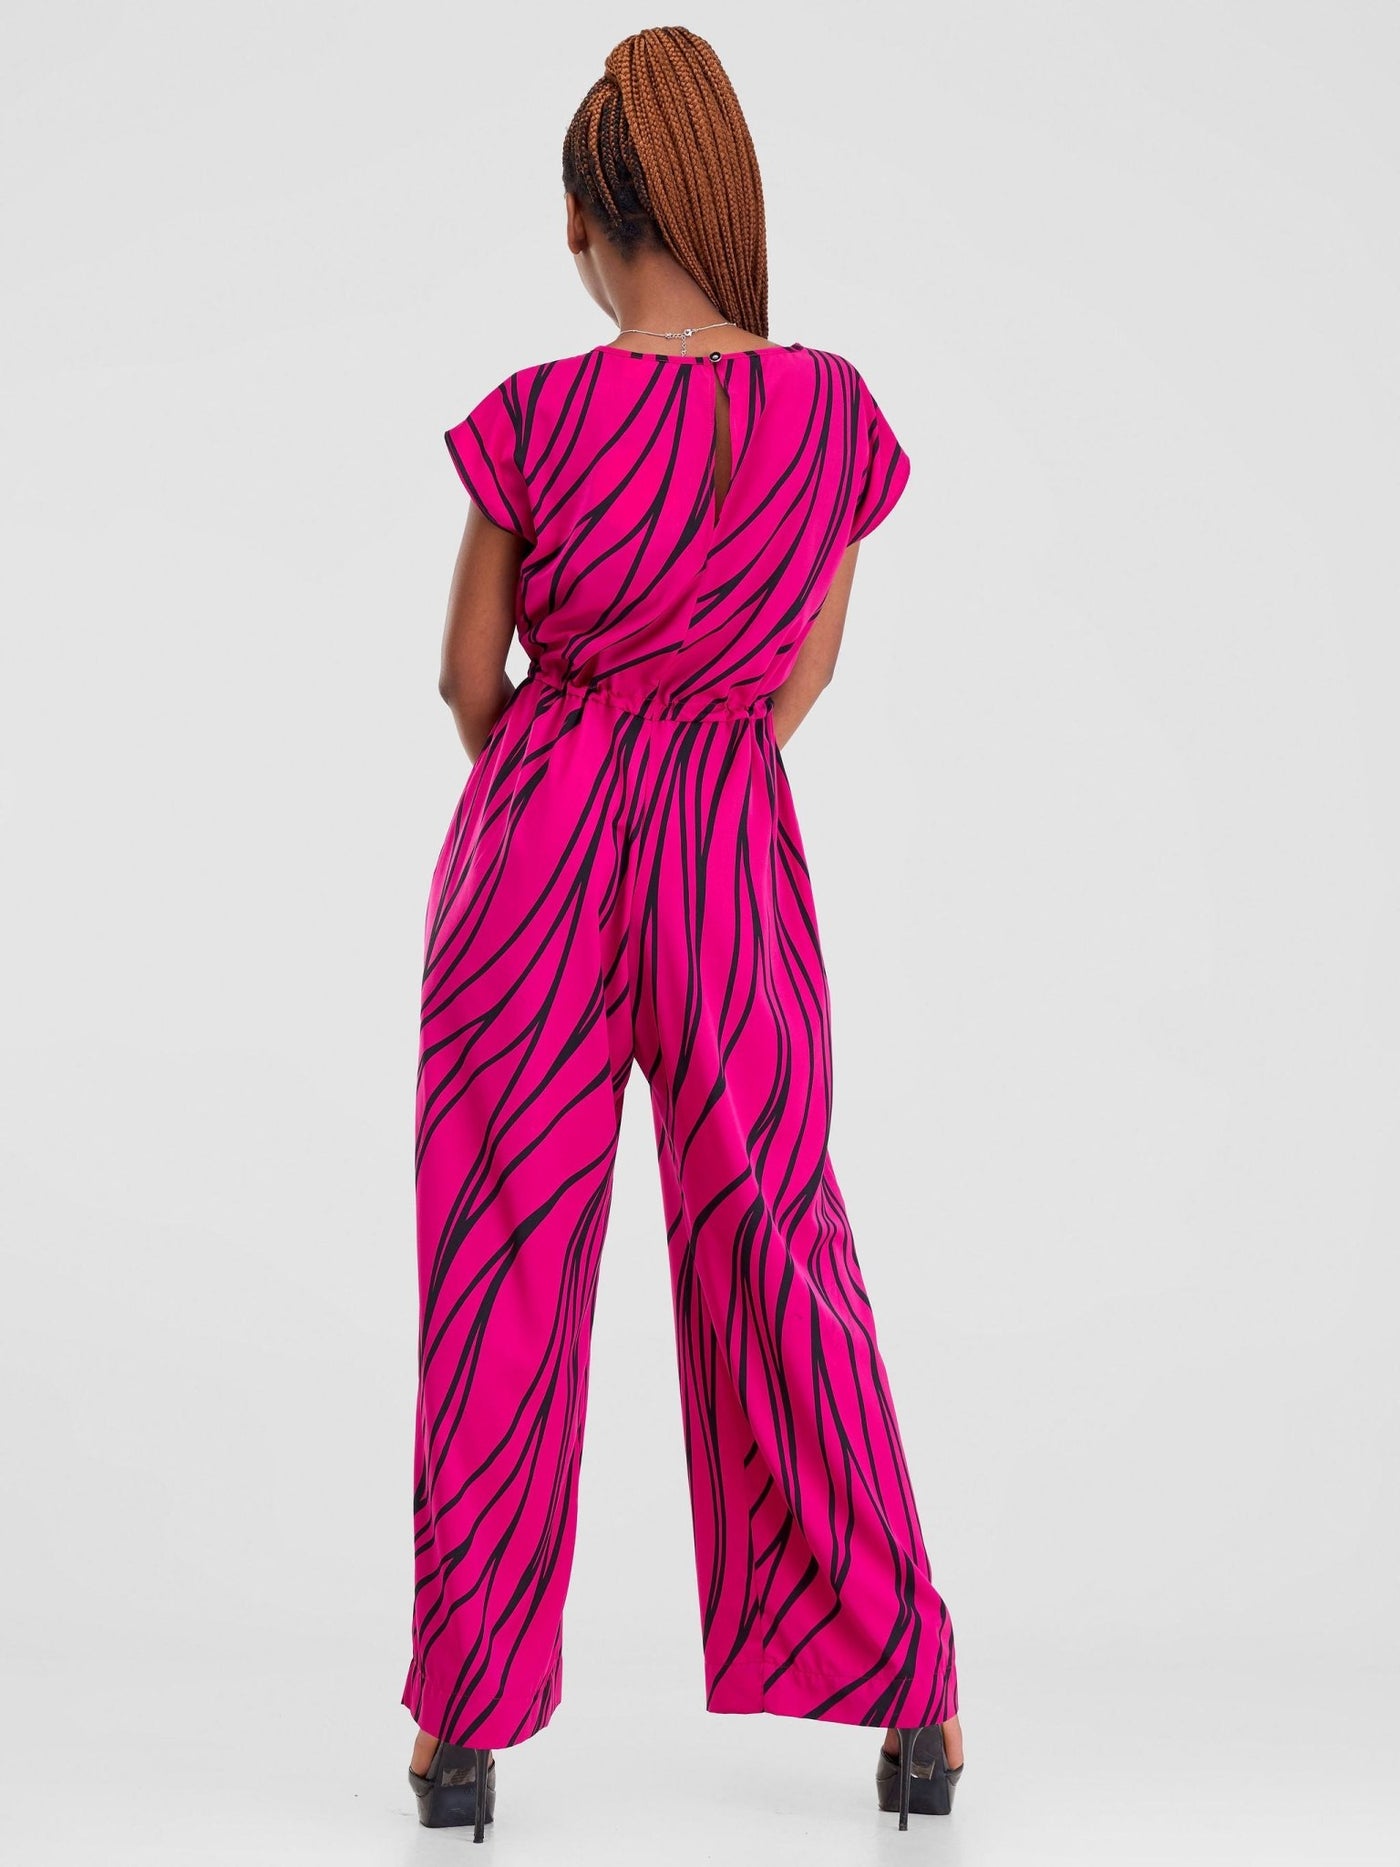 Vivo Sakari Drop Shoulder Jumpsuit - Hot Pink Sari Print - Shopzetu